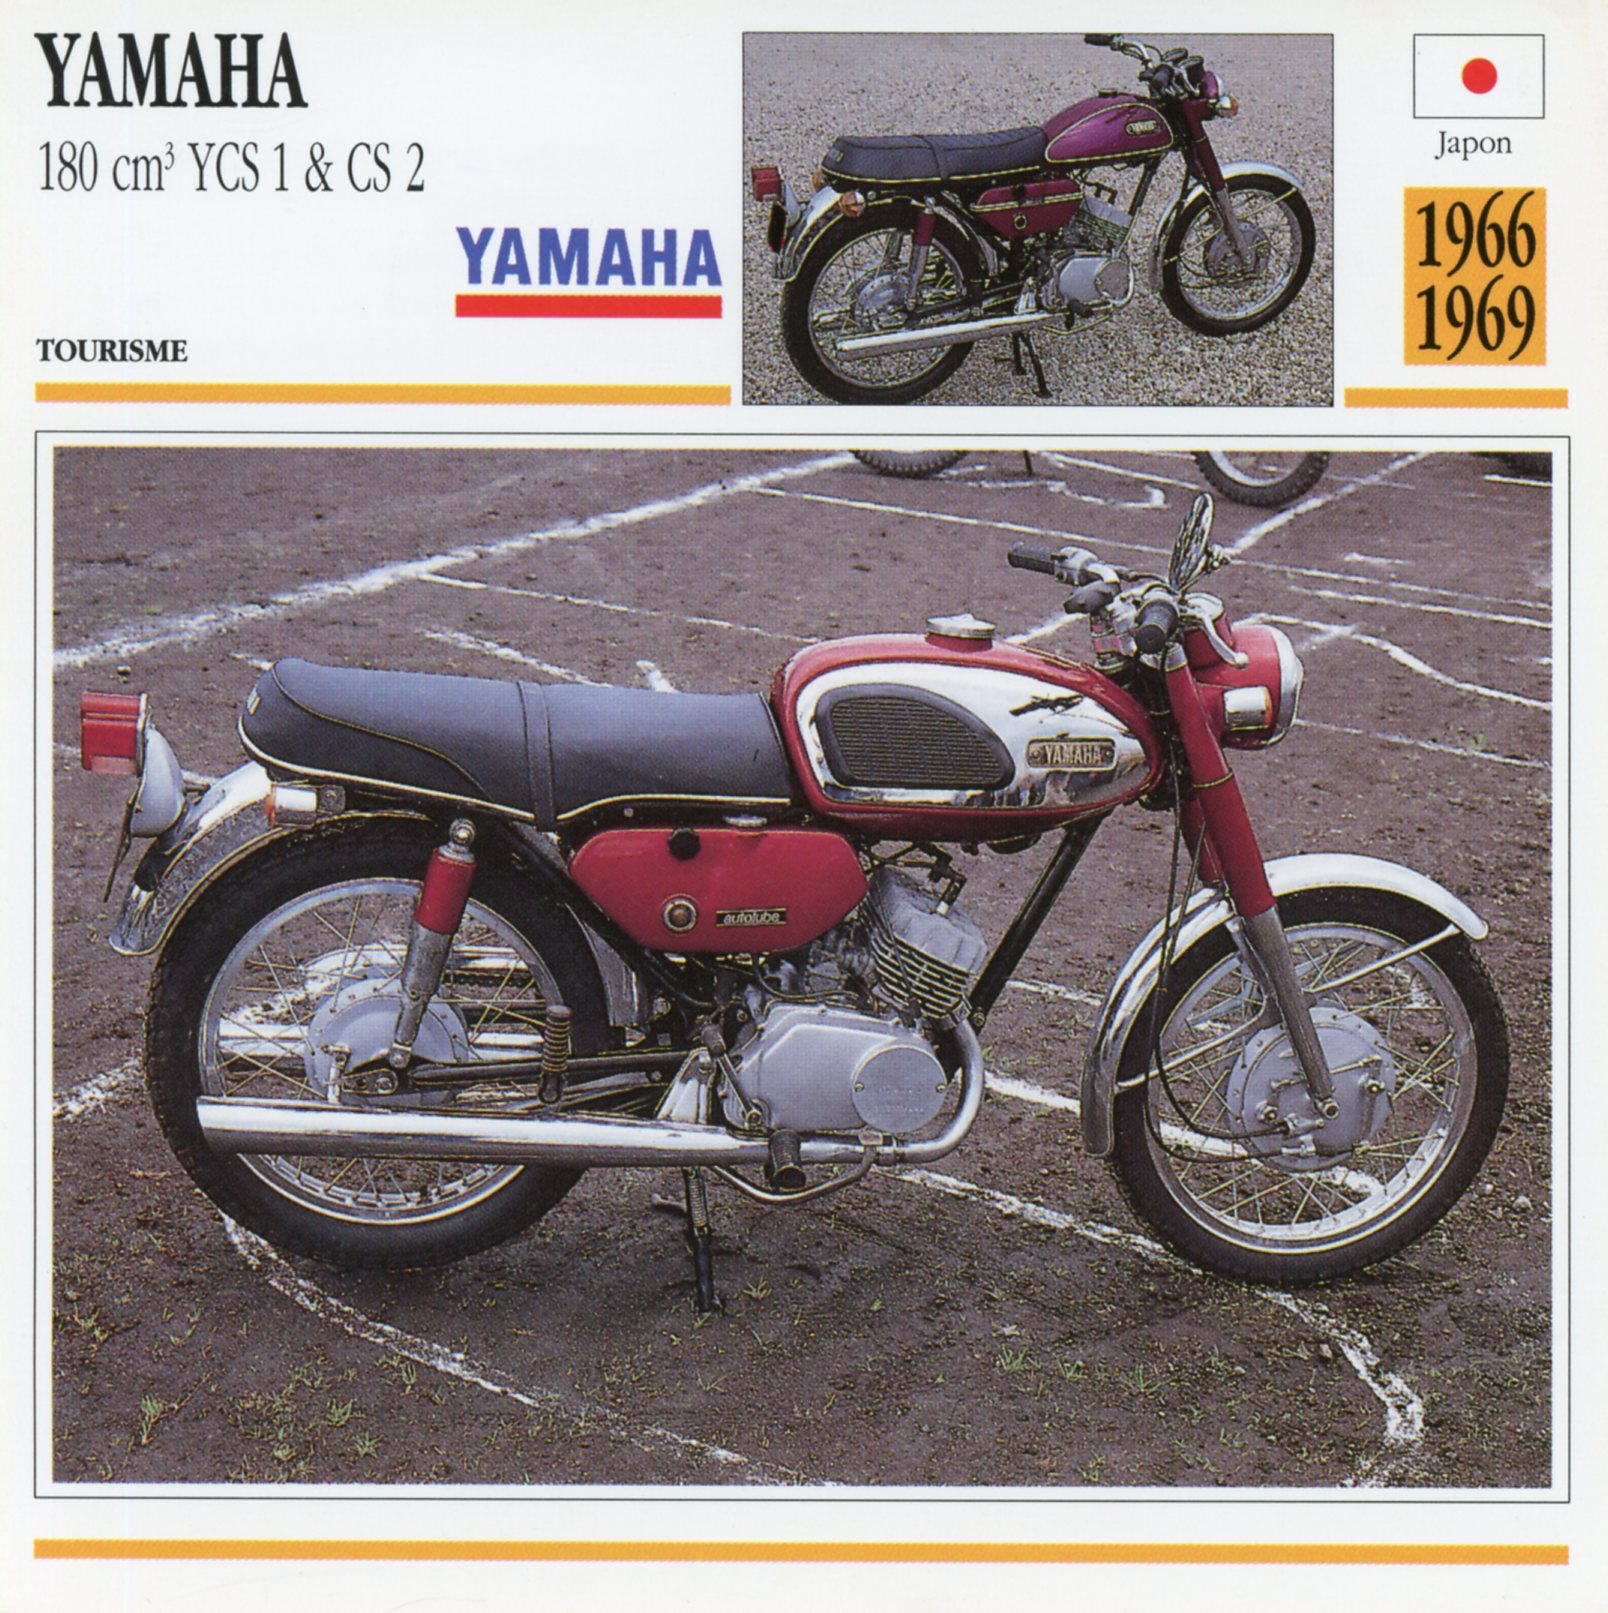 FICHE-MOTO-YAMAHA-180-YCS-CS2-CS1-LEMASTERBROCKERS-littérature-brochure